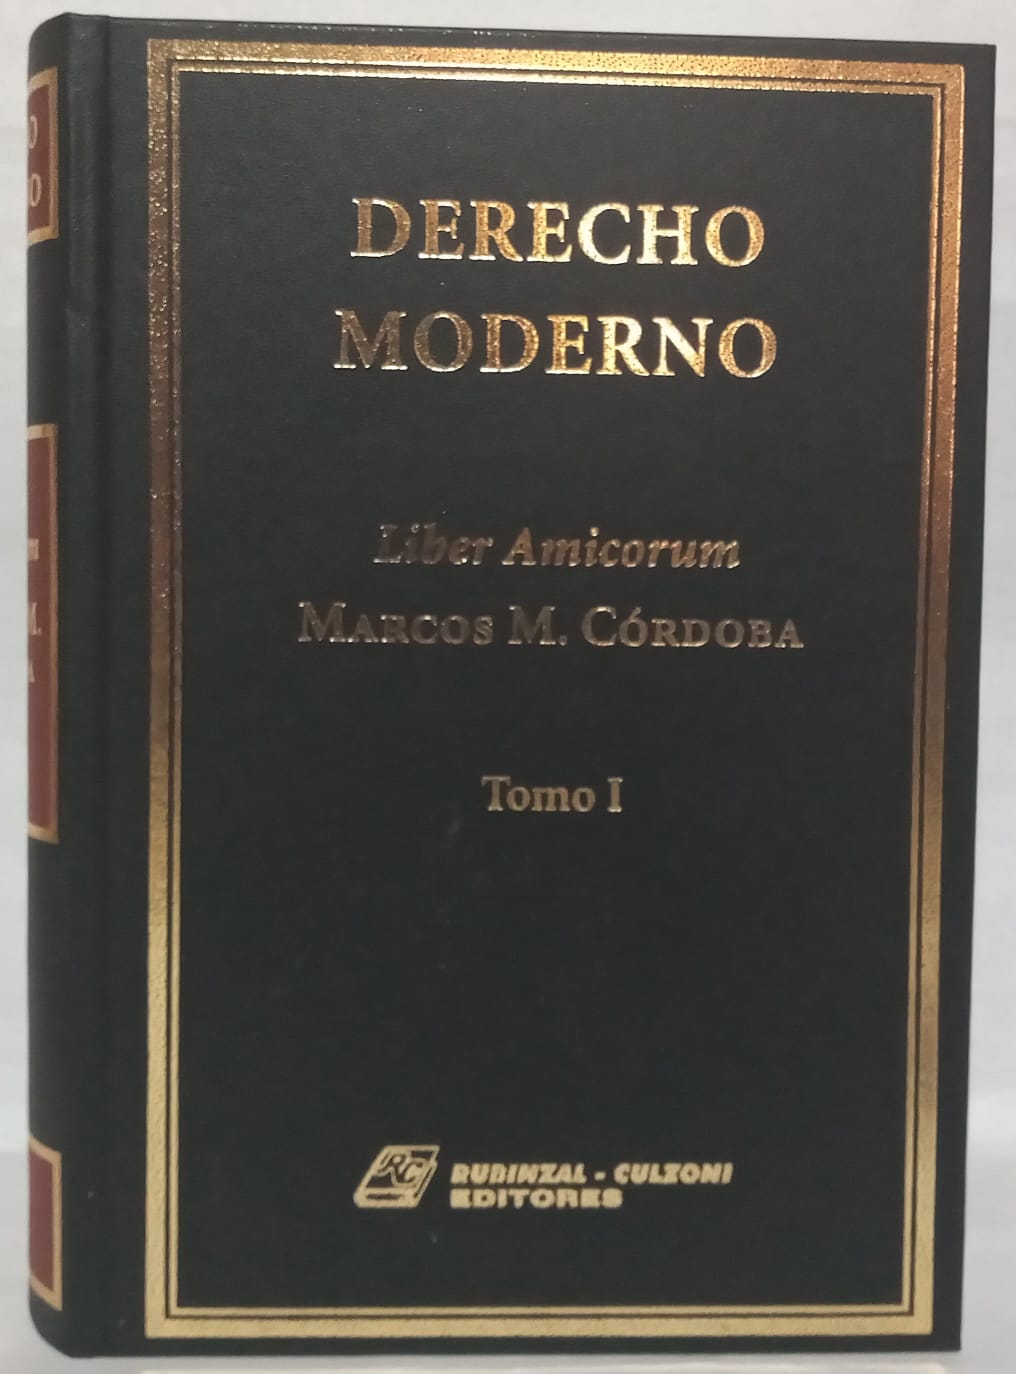 Derecho Moderno - Liber Amicorum - Tomo I